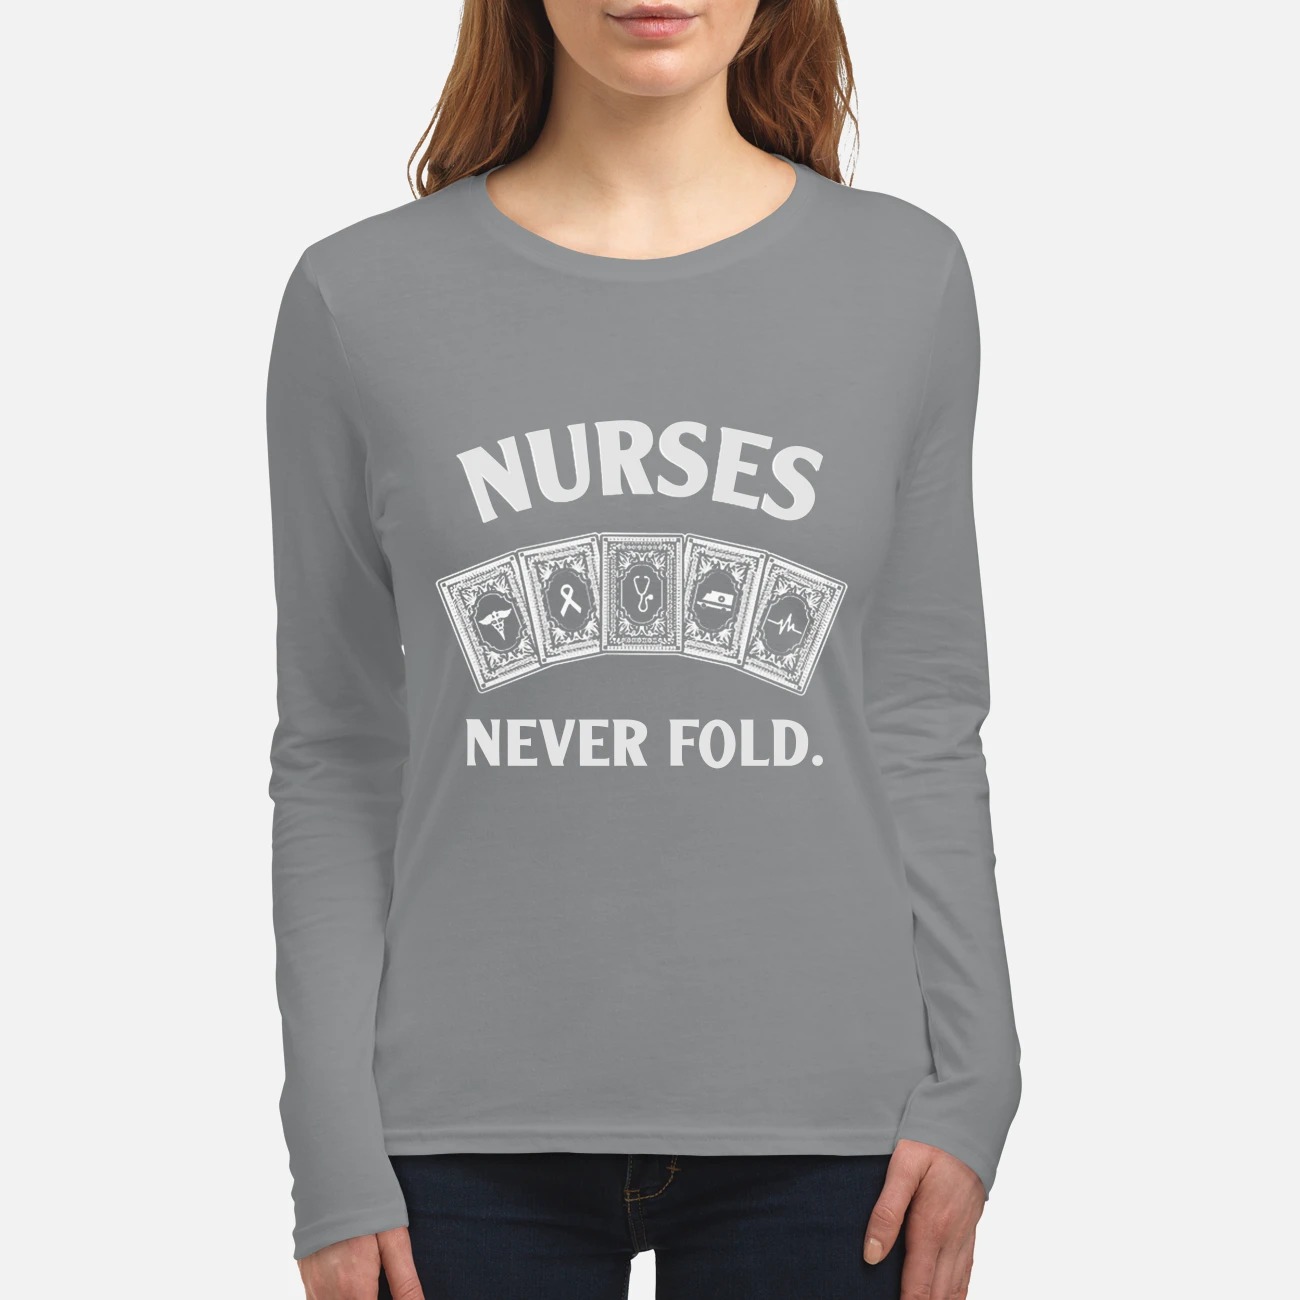 Nurses never fold women's long sleeved shirt